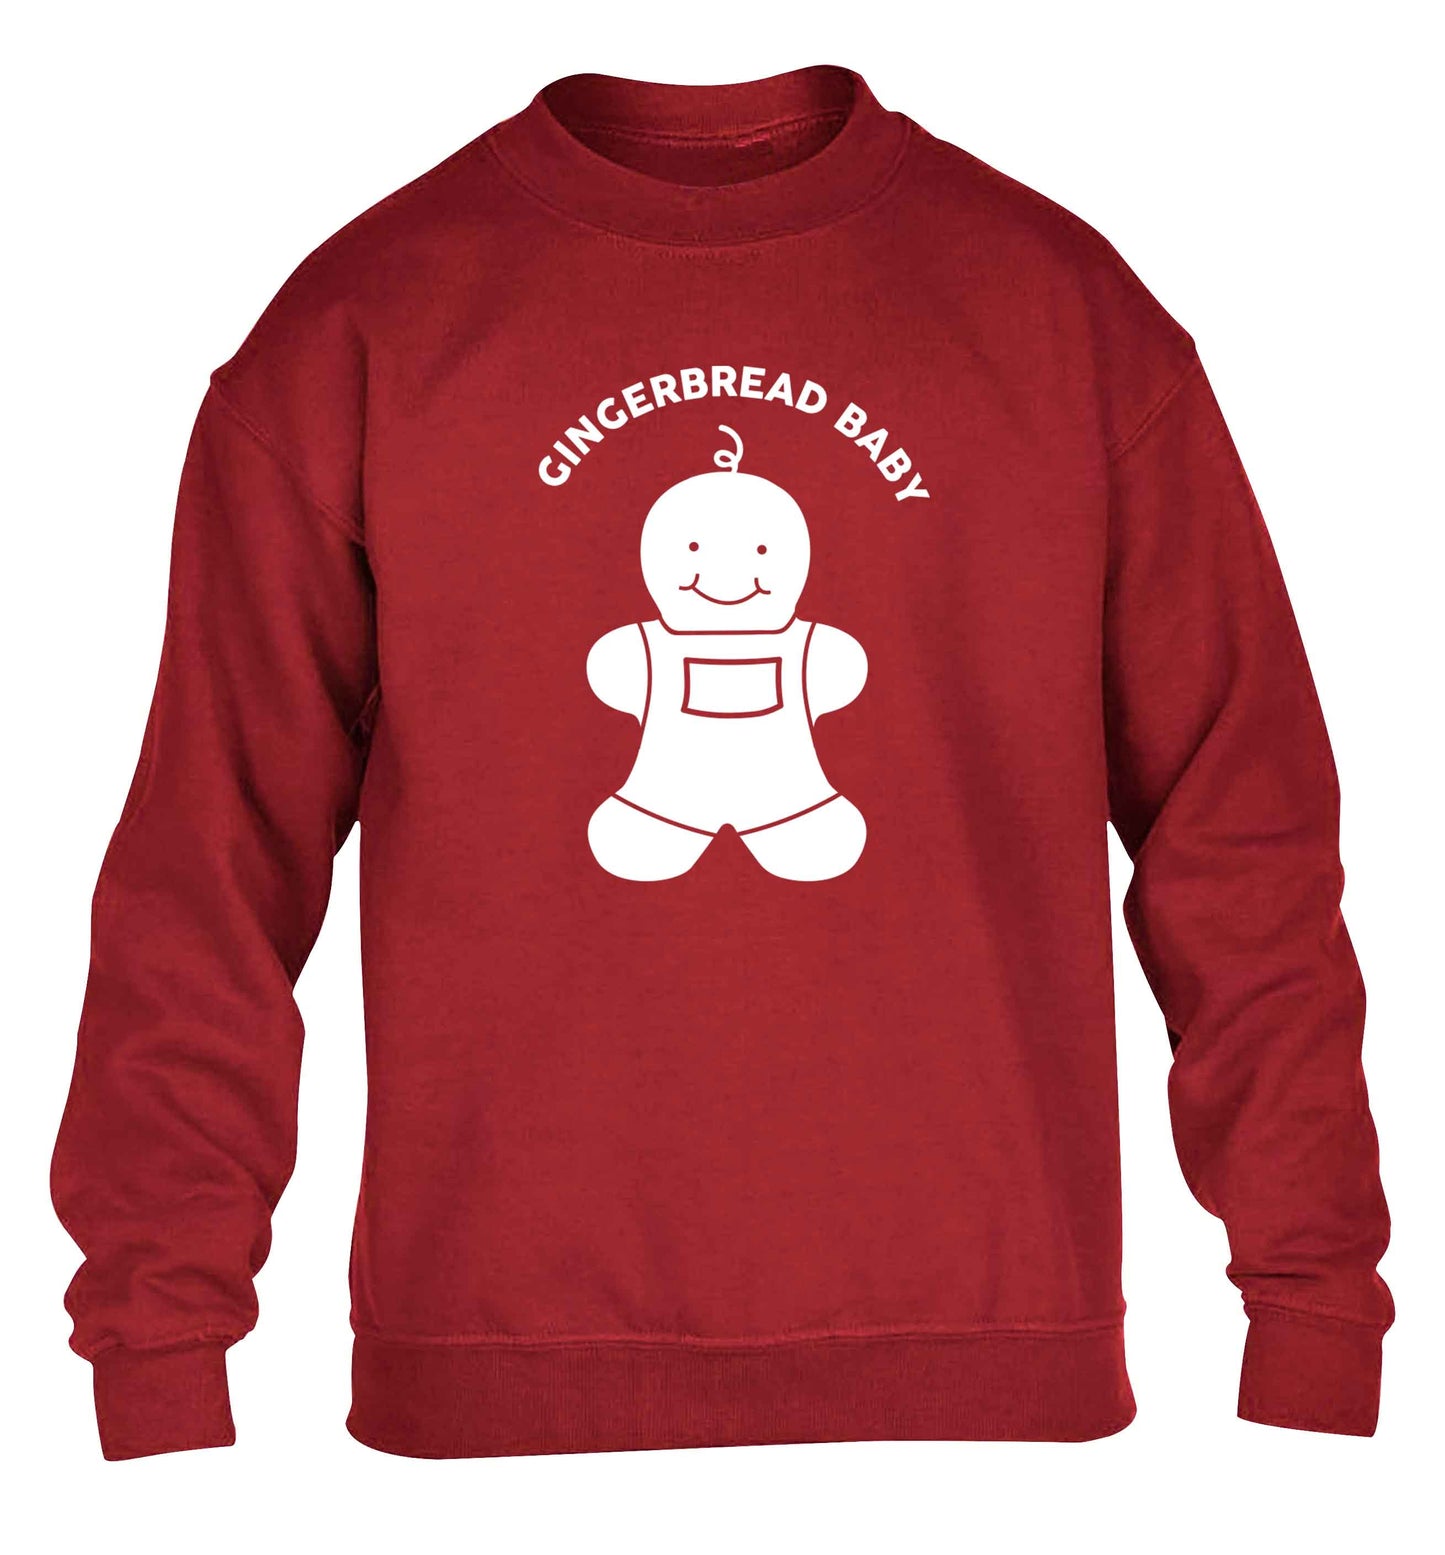 Gingerbread baby children's grey sweater 12-13 Years